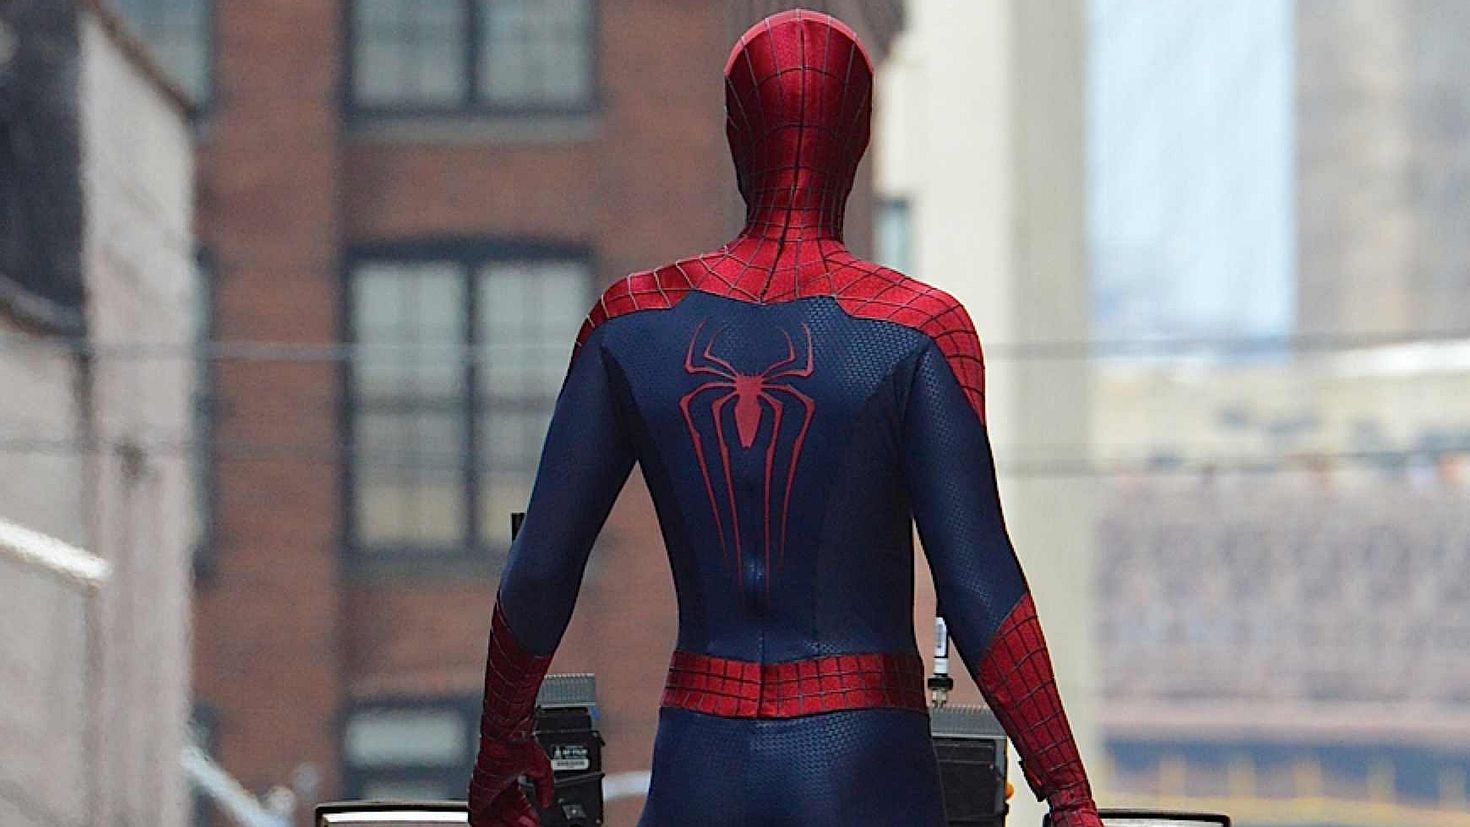 Новый человек примеры. The amazing Spider-man 2 (новый человек — паук 2). Новый человек паук 2 Эндрю Гарфилд. Эмэйзинг Спайдер Мэн. Человек паук tasm 2.